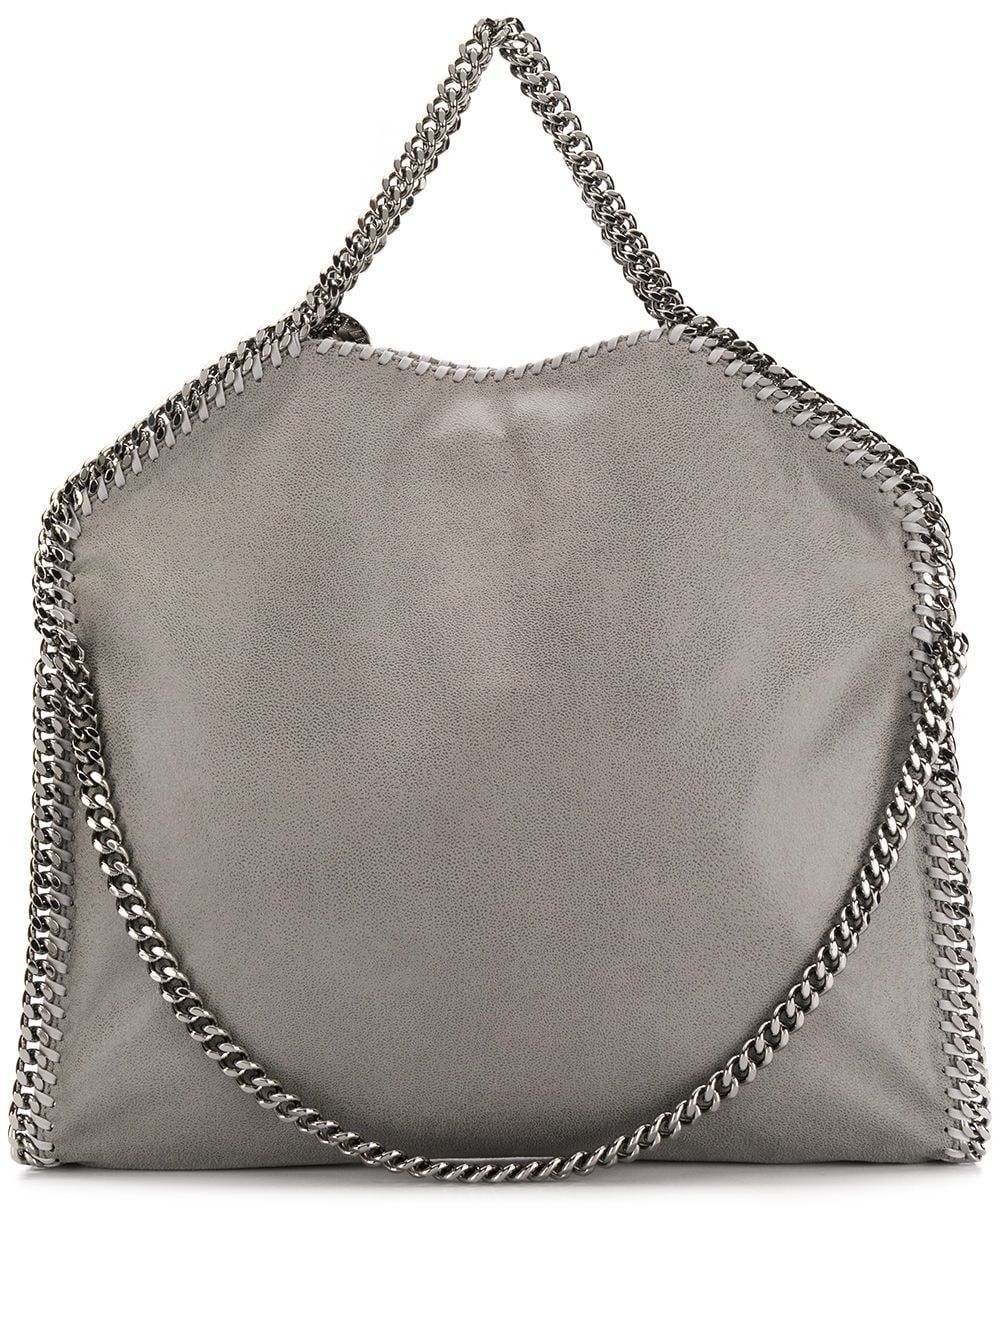 STELLA MCCARTNEY Grey Falabella Fold Over Tote Handbag for Women